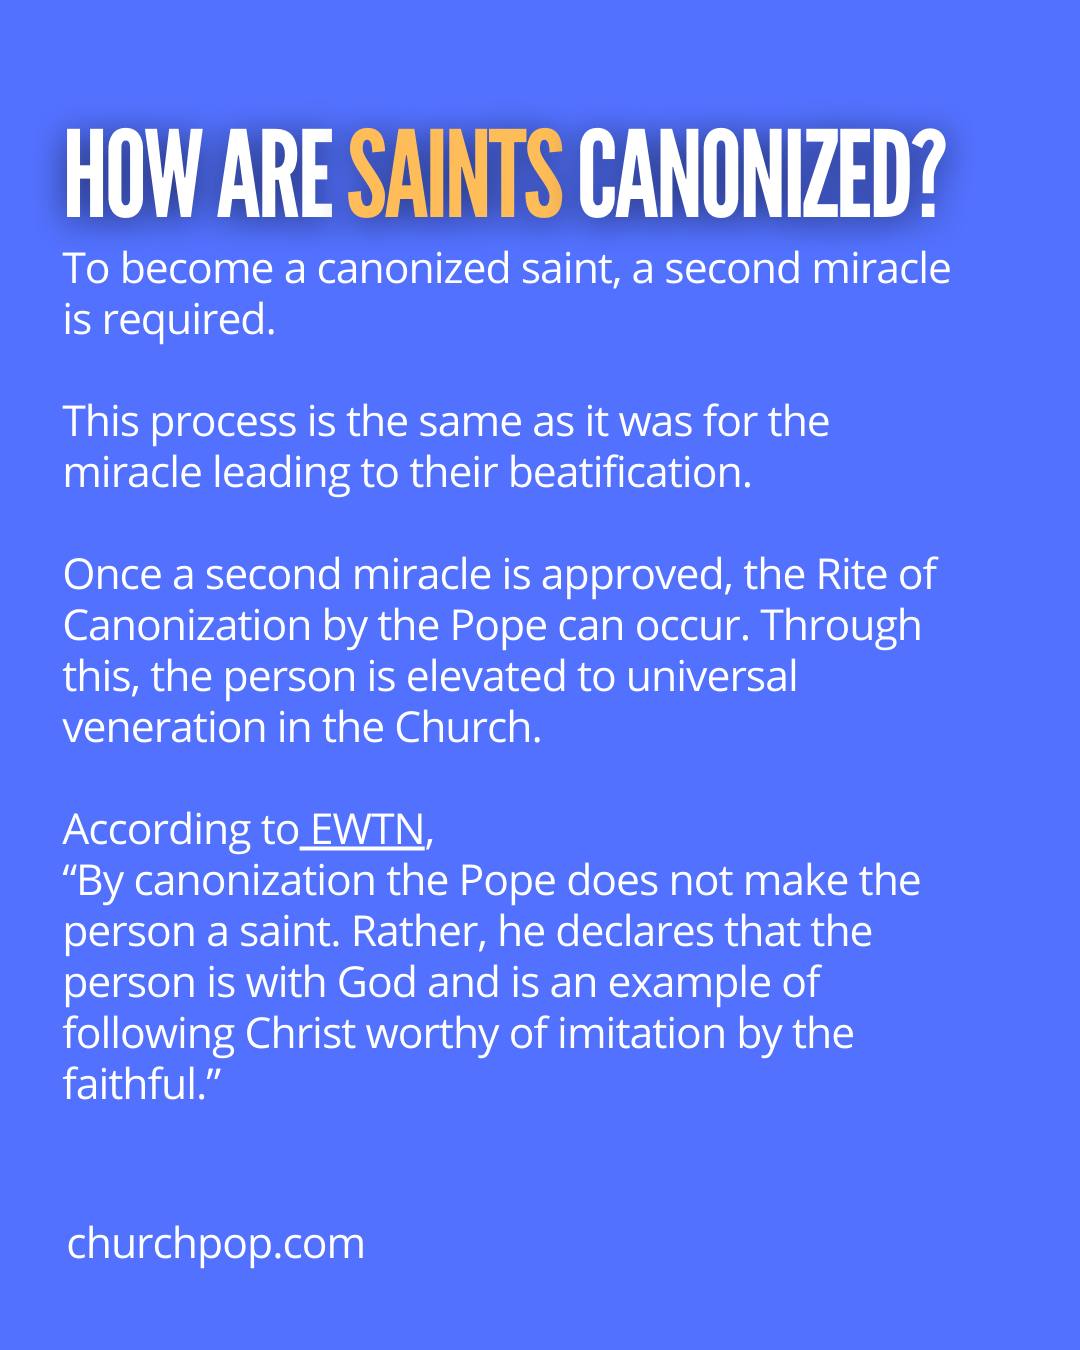 How are saints canonized?